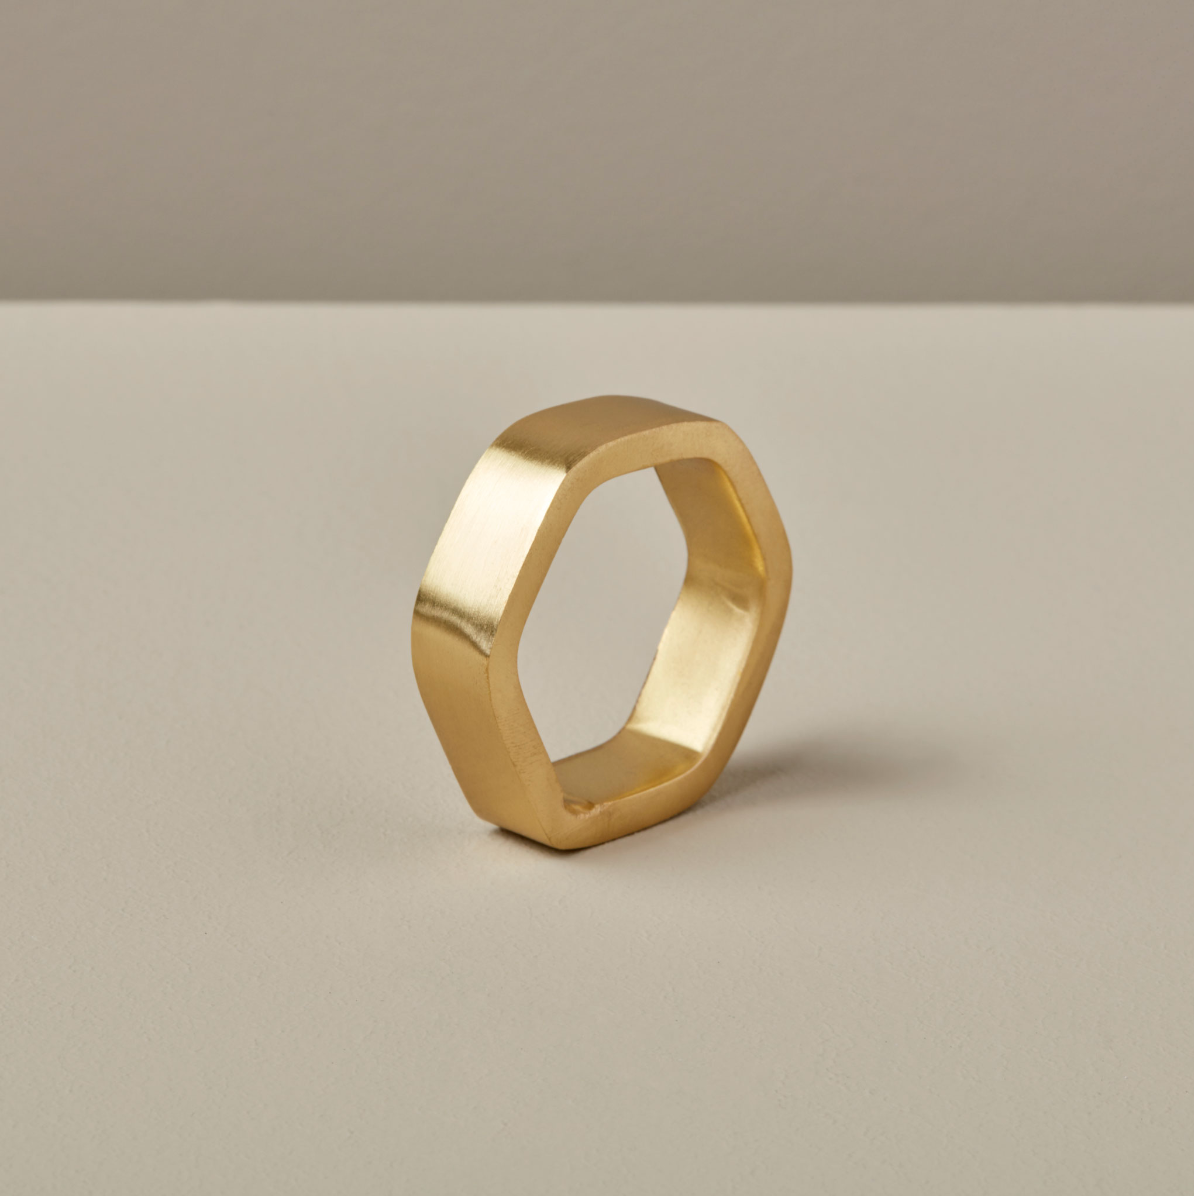 Hexagon Napkin Rings in Gold, Set of 4